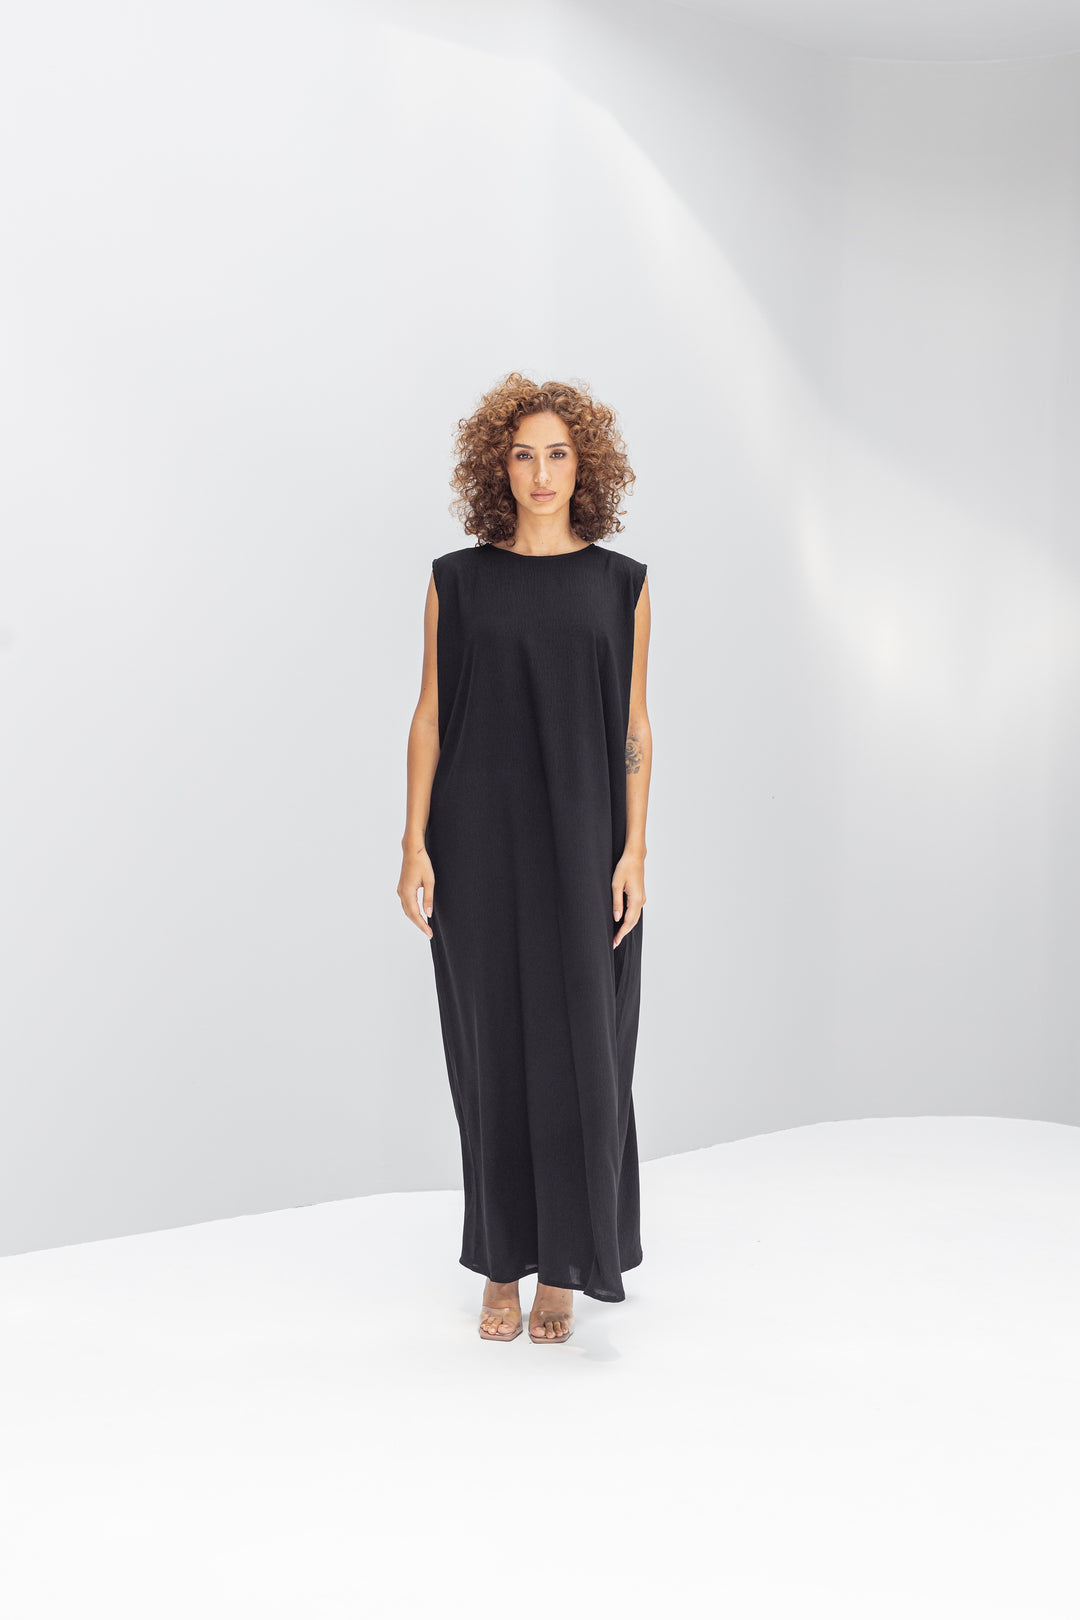 Slip Dresses UK: Under Abaya Long-Sleeve & Sleeveless Slips